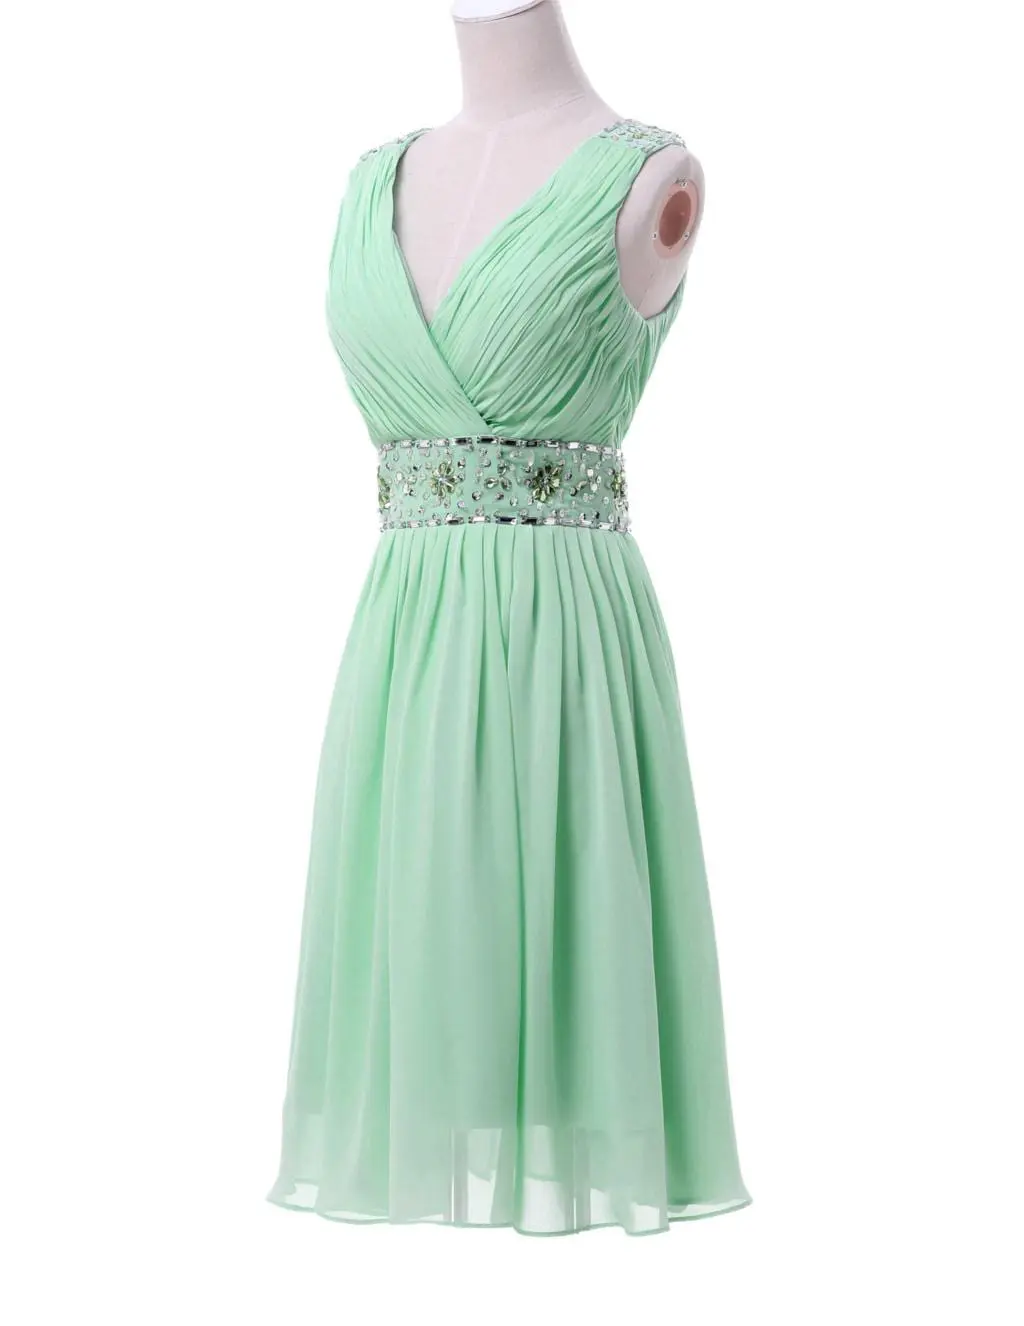 Mint Green Short Chiffon Sequin Bridesmaid Dress